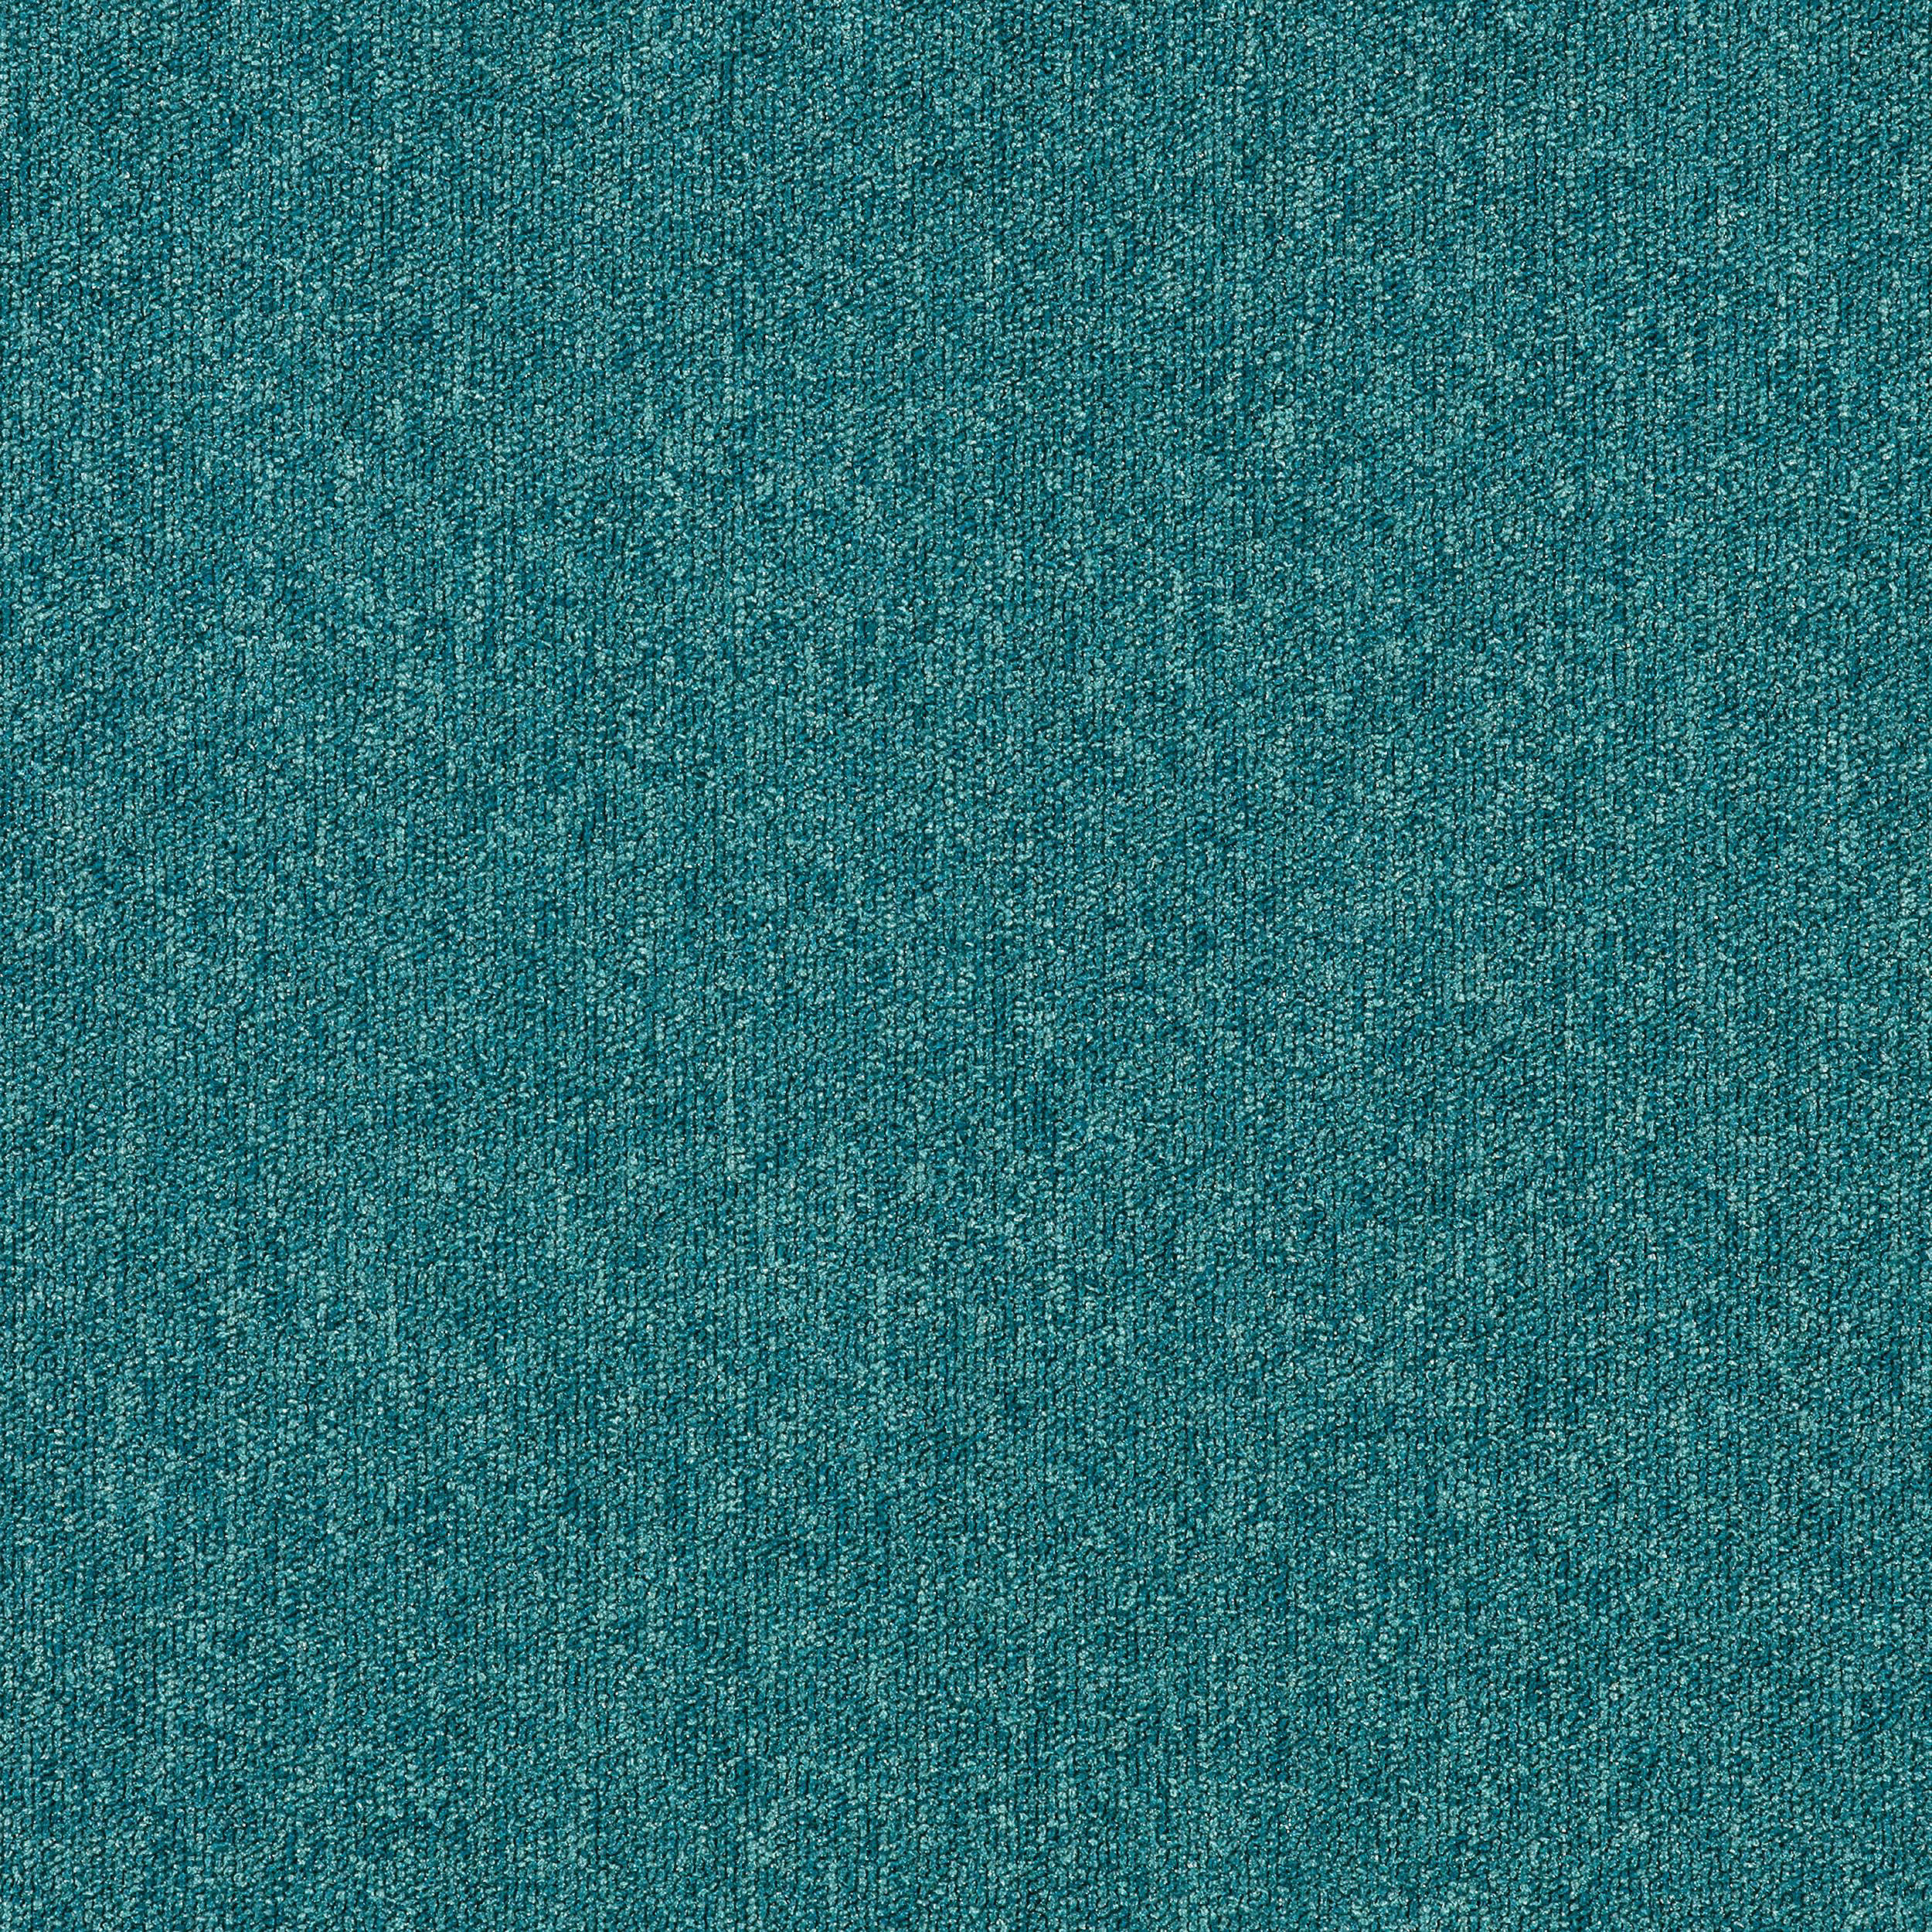 Heuga 580 Carpet Tile In Reef afbeeldingnummer 7